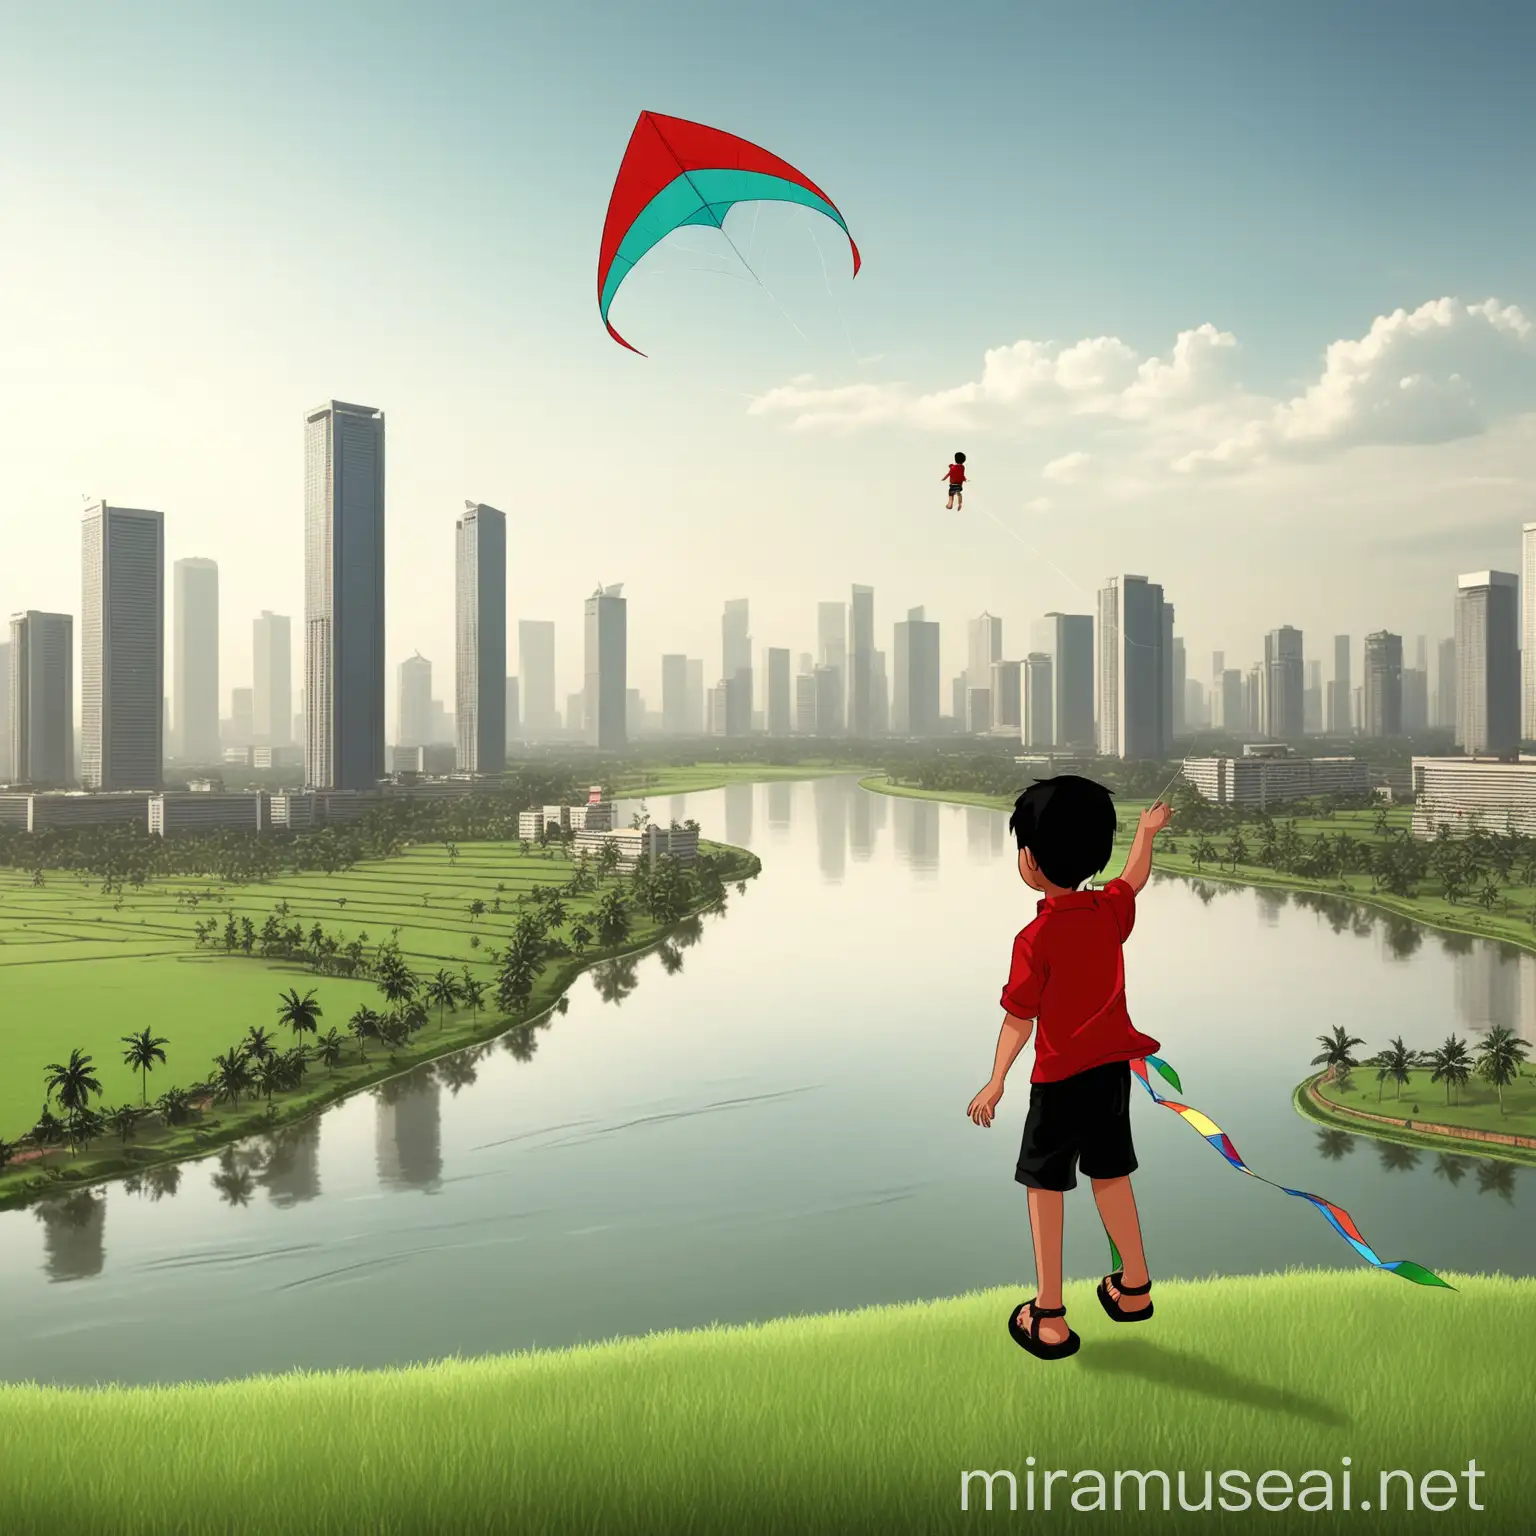 Cheerful Boy Flying Kite in Urban Park Overlooking Jakarta Skyline